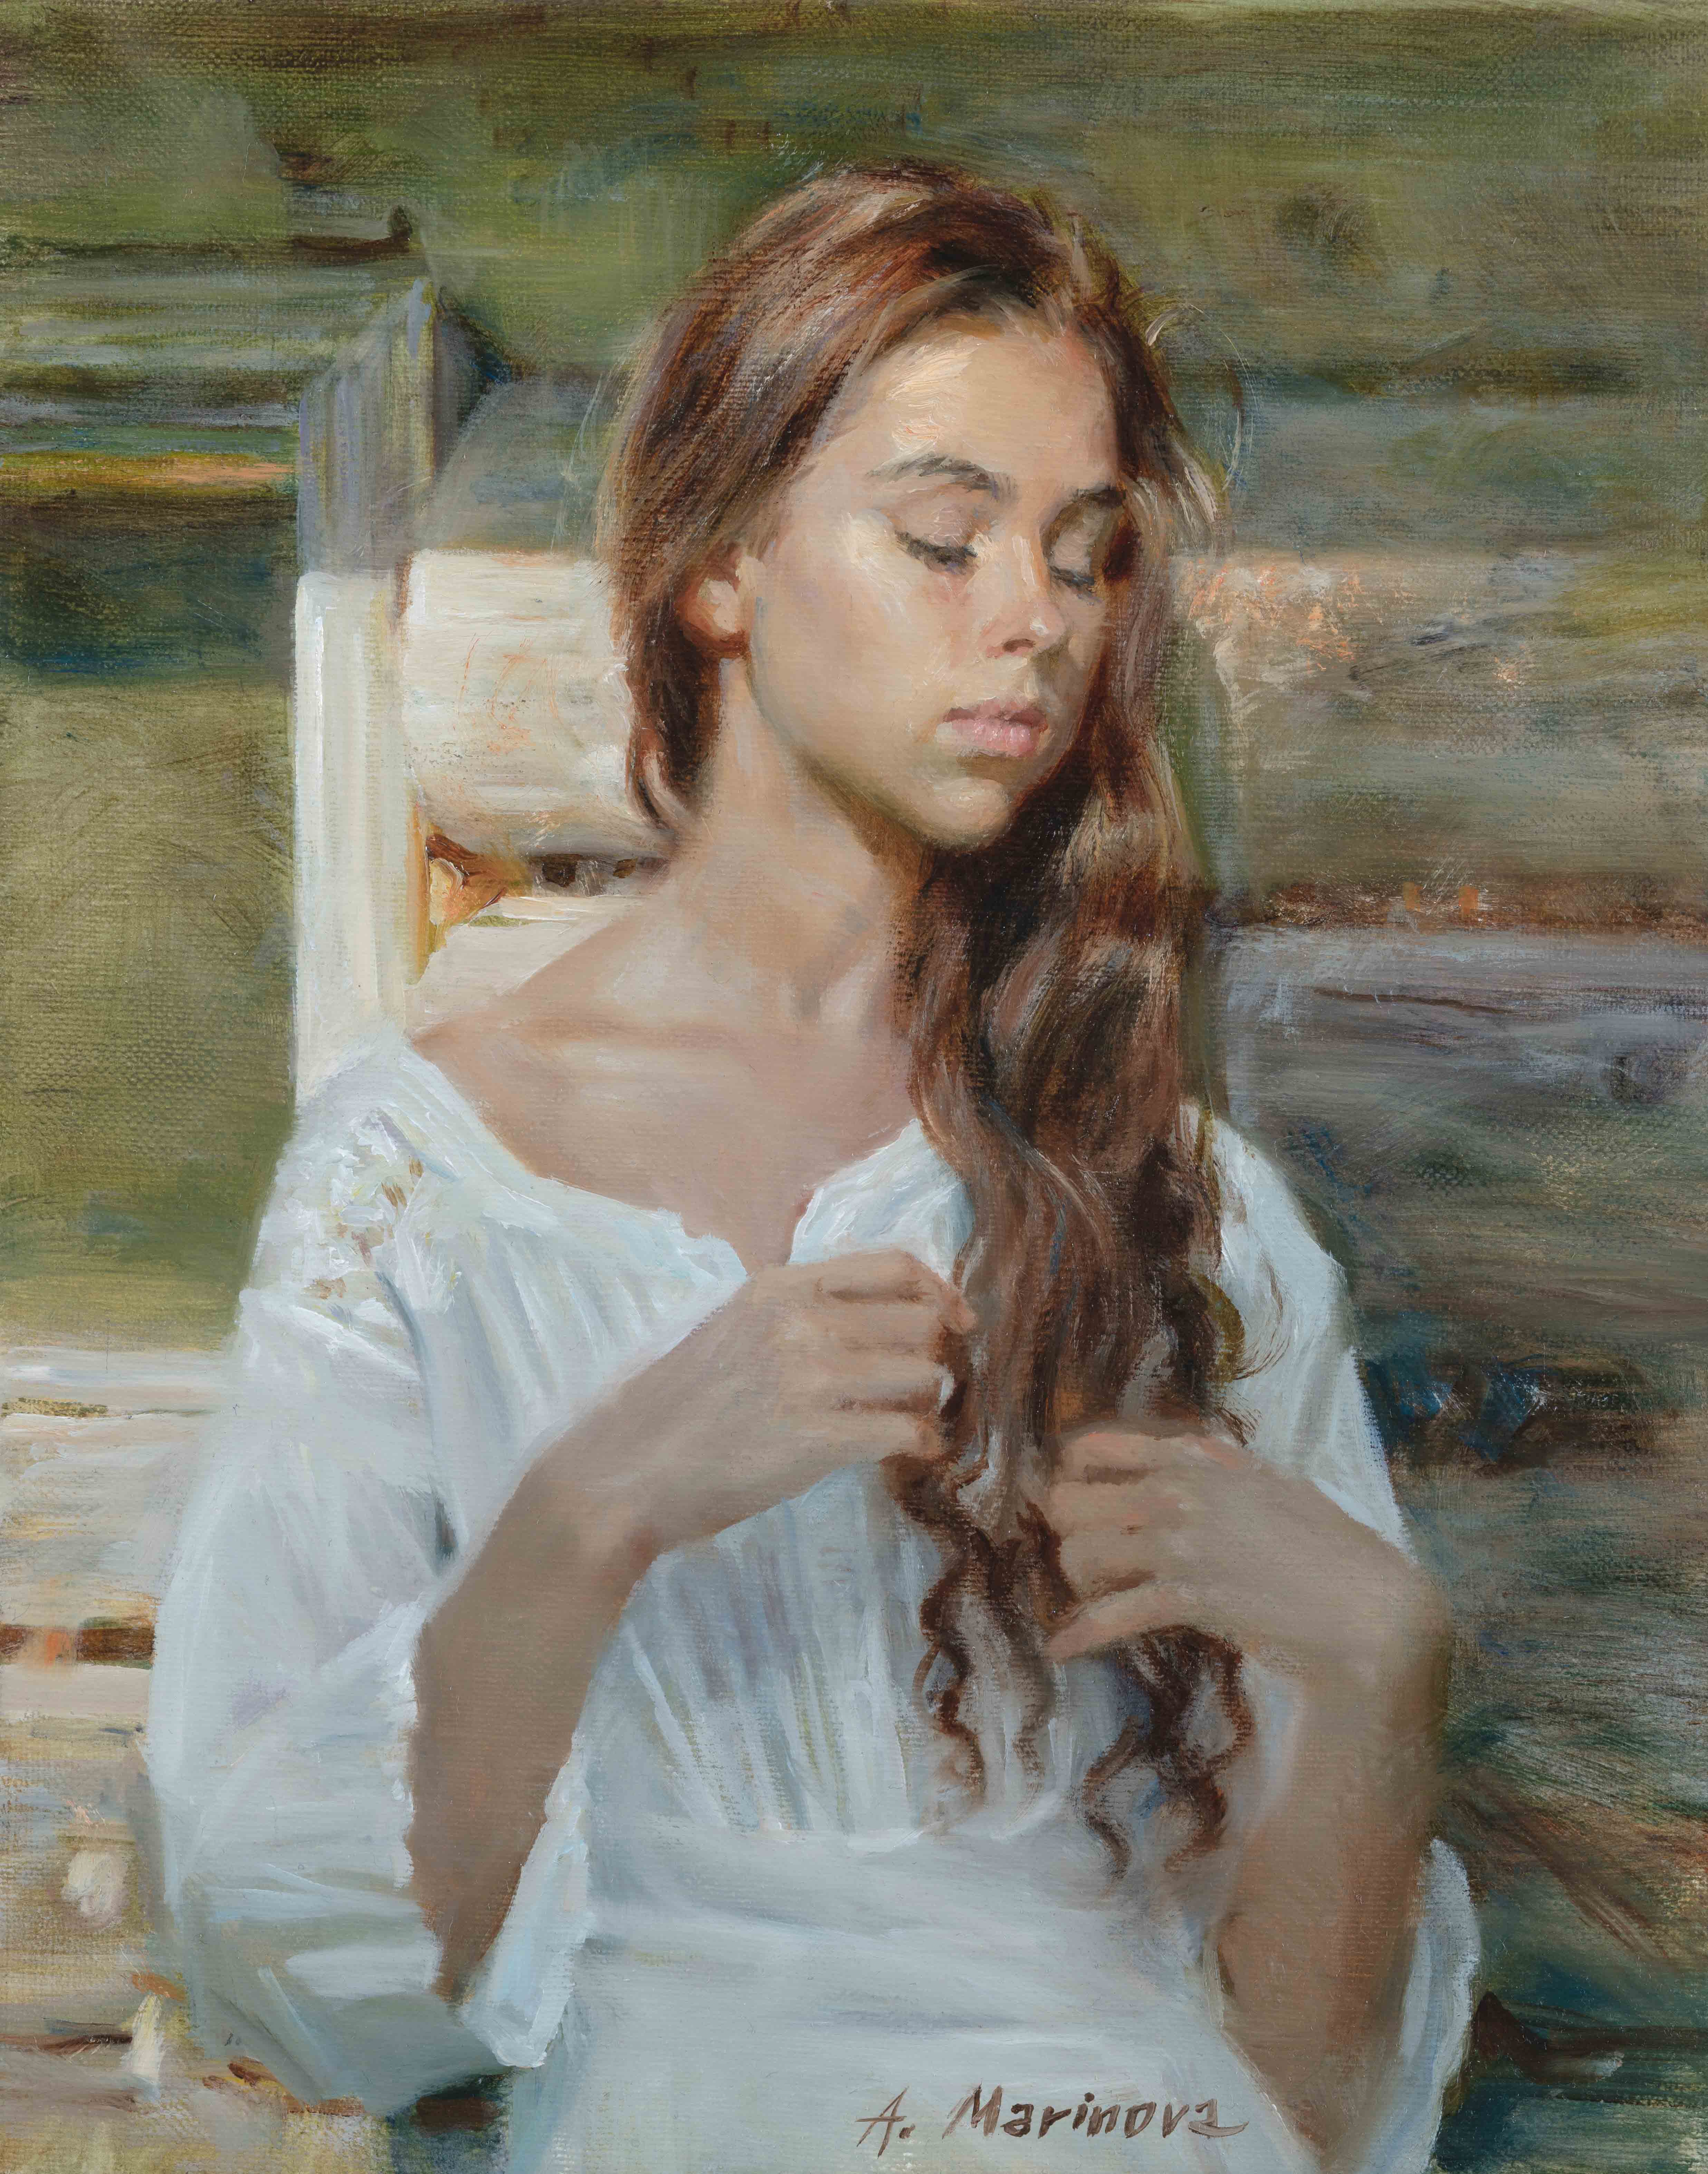 The Girl in White - 1, Anna Marinova, Buy the painting Oil